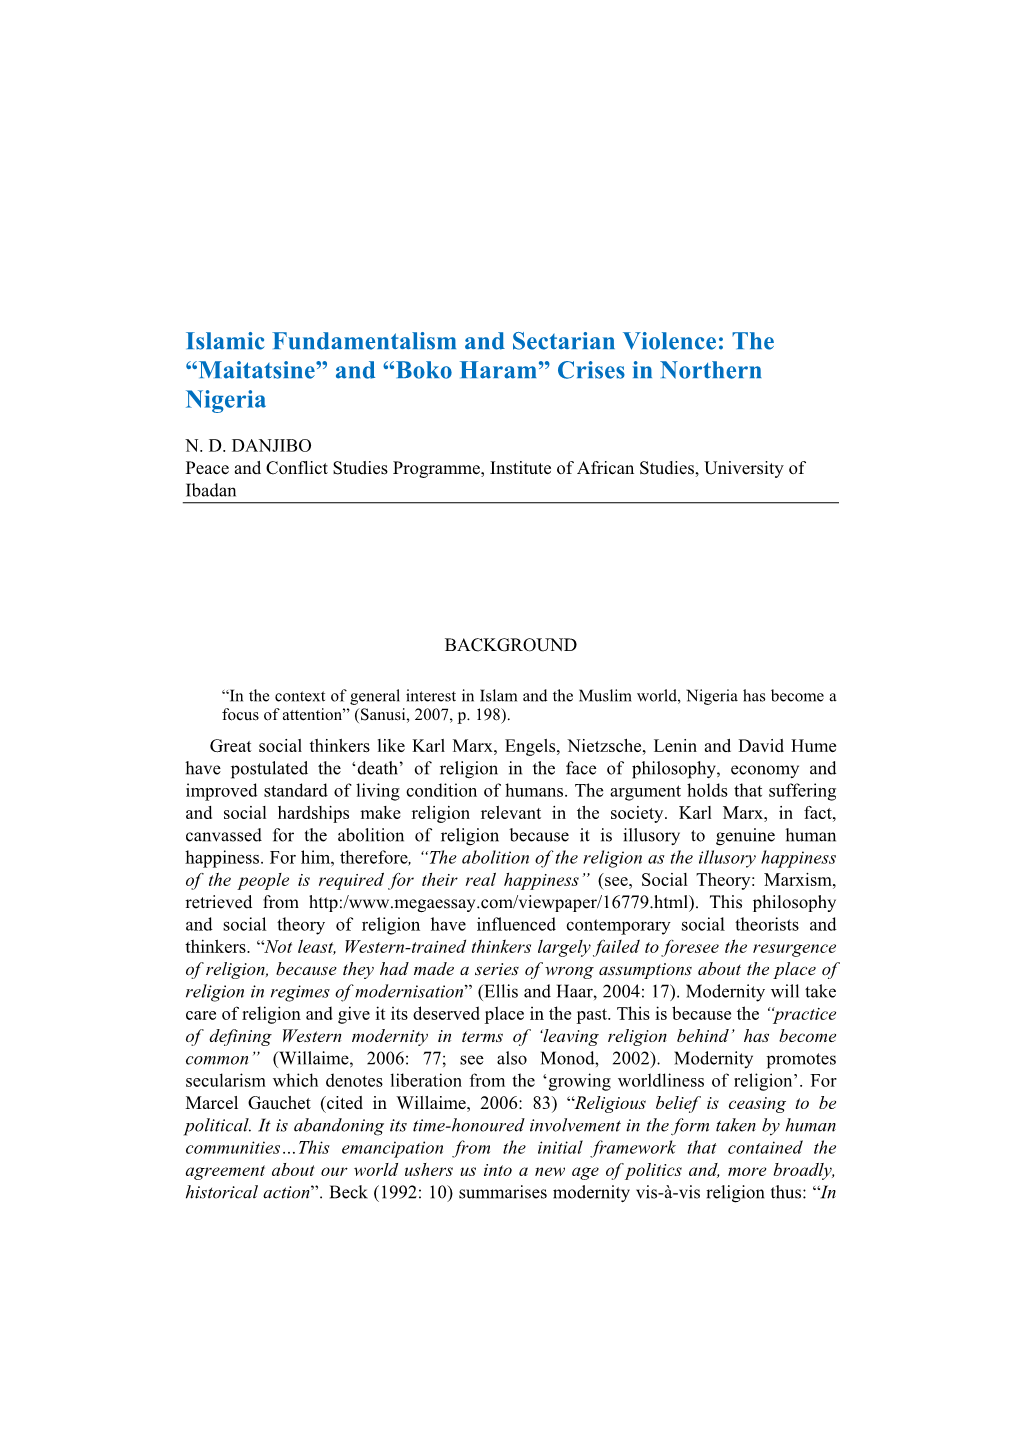 Islamic Fundamentalism and Sectarian Violence: the “Maitatsine” and “Boko Haram” Crises in Northern Nigeria